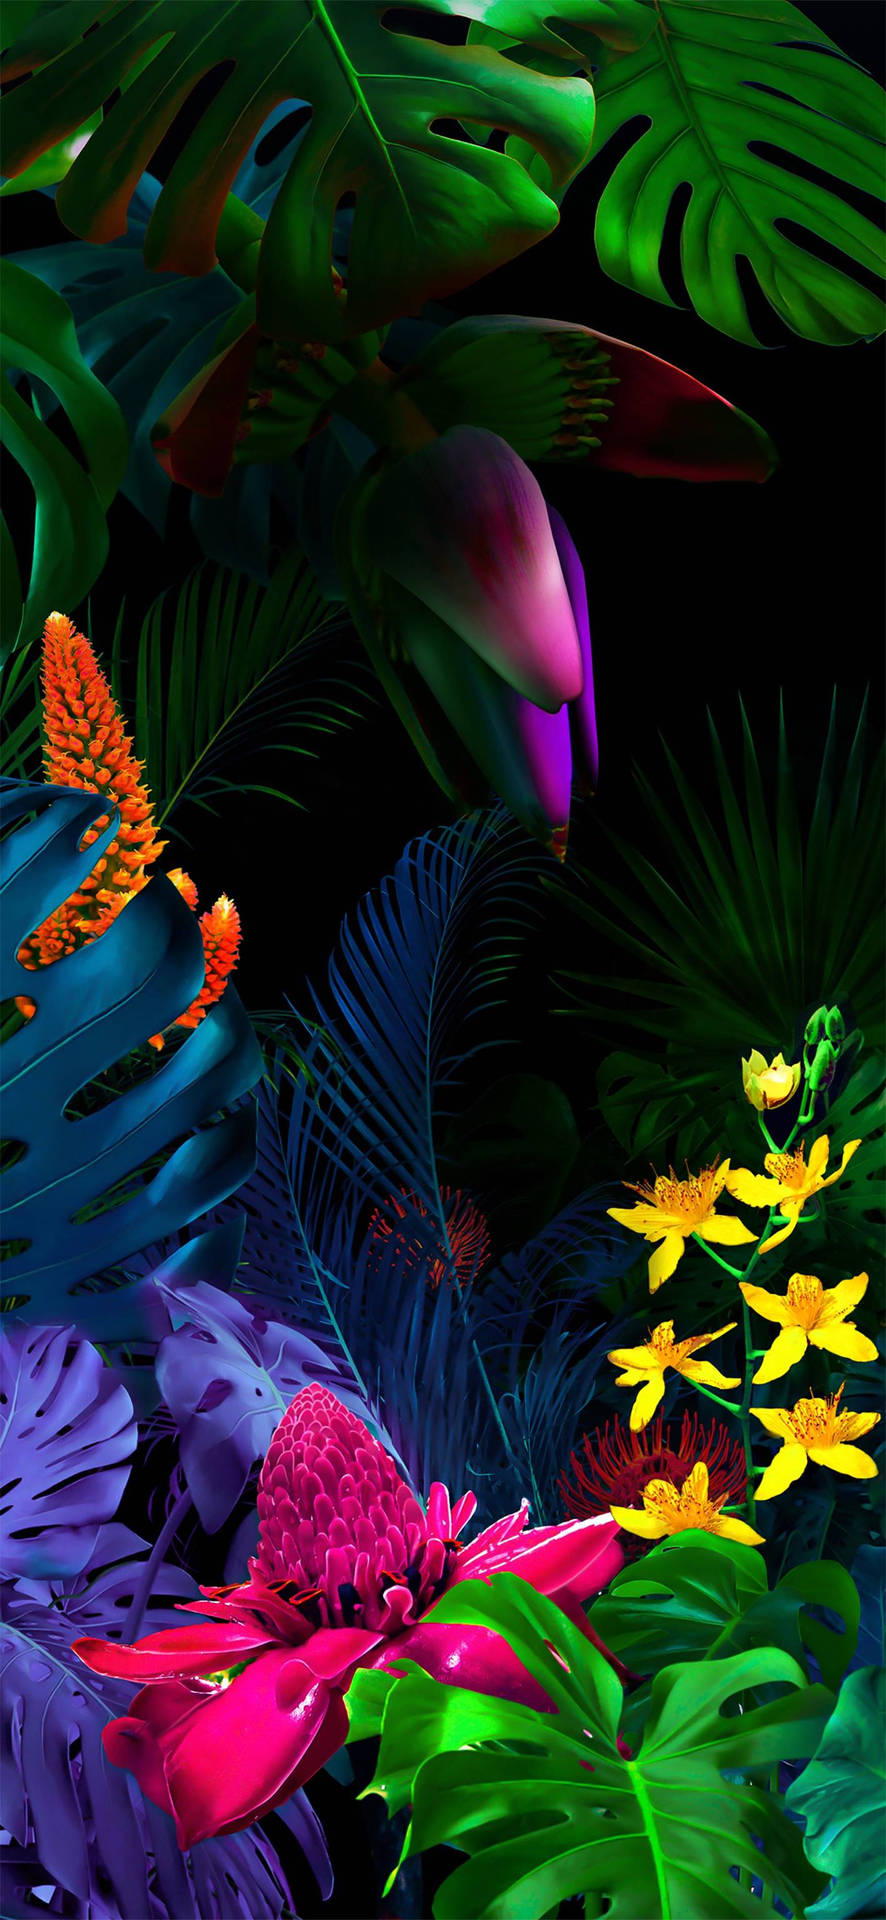 Tropical wallpaper on black background summer Vector Image